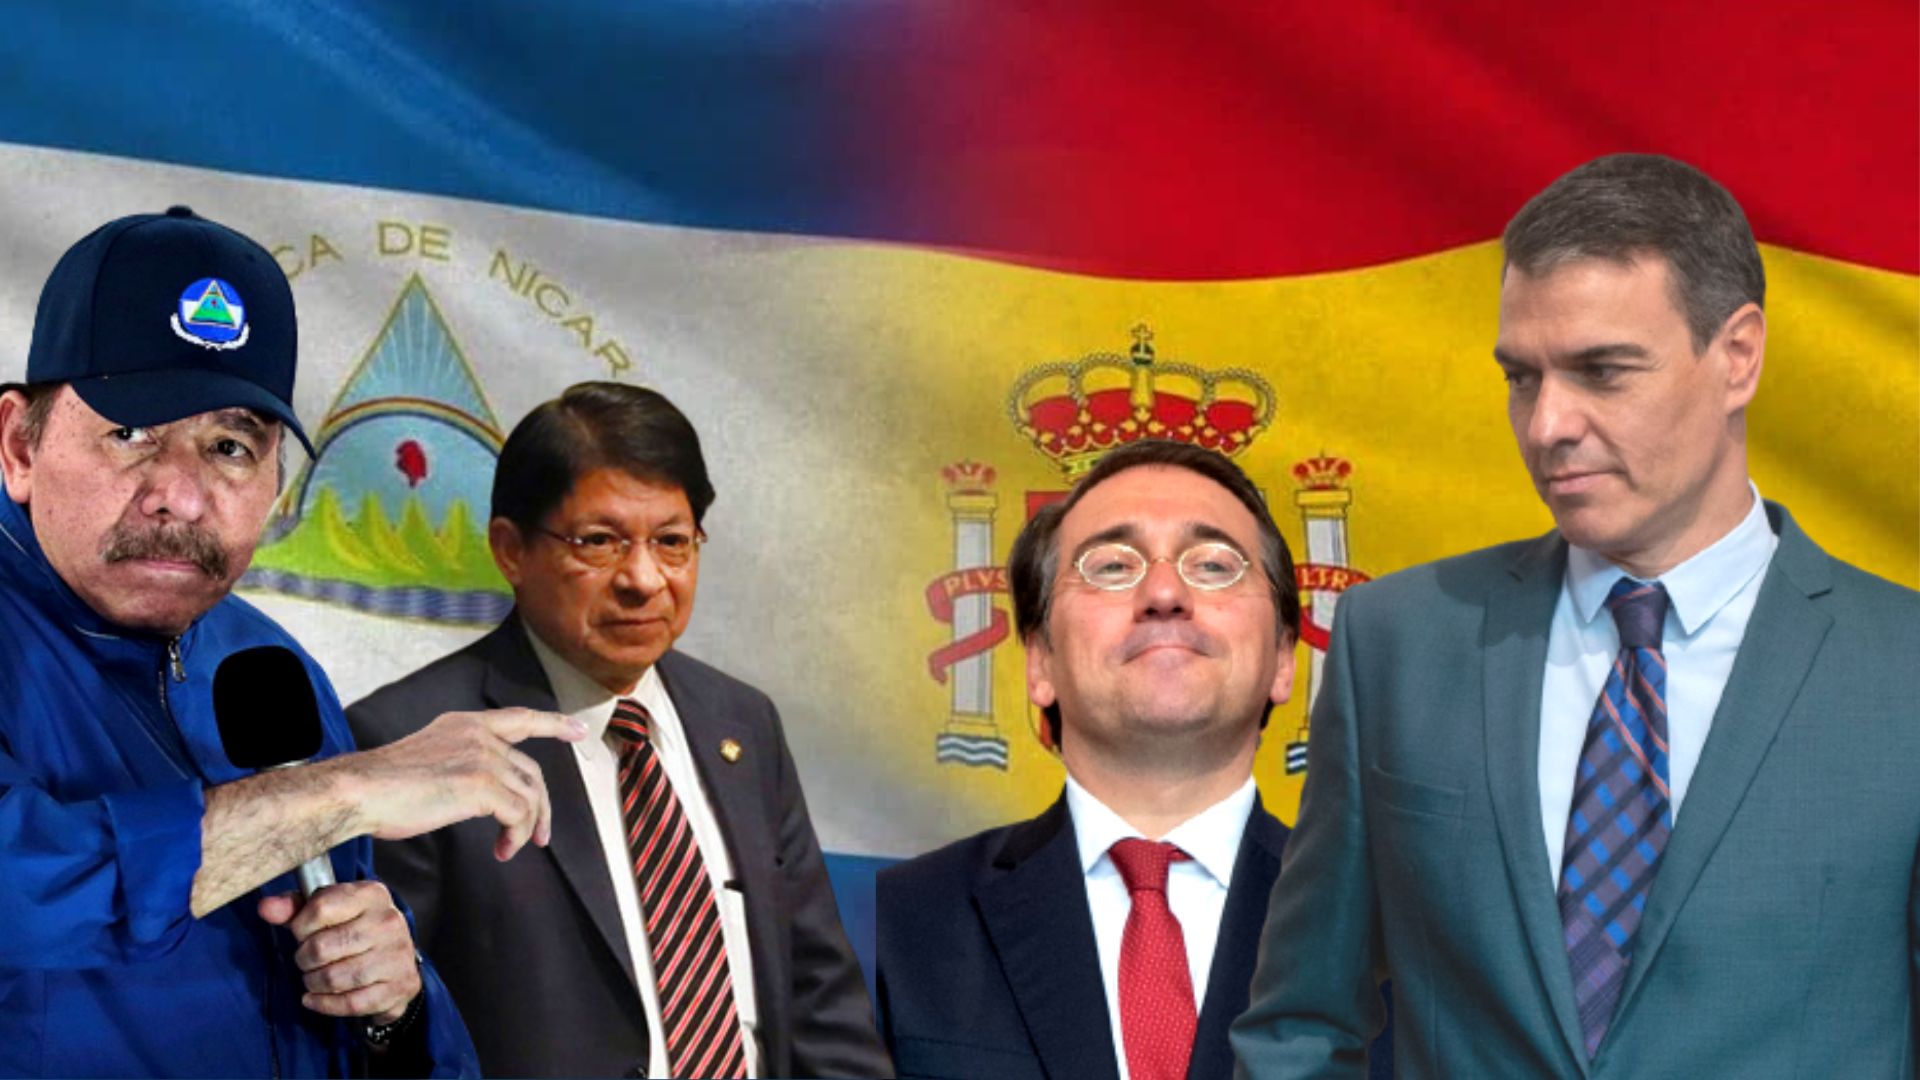 Spain appoints a new ambassador to the Ortega dictatorship